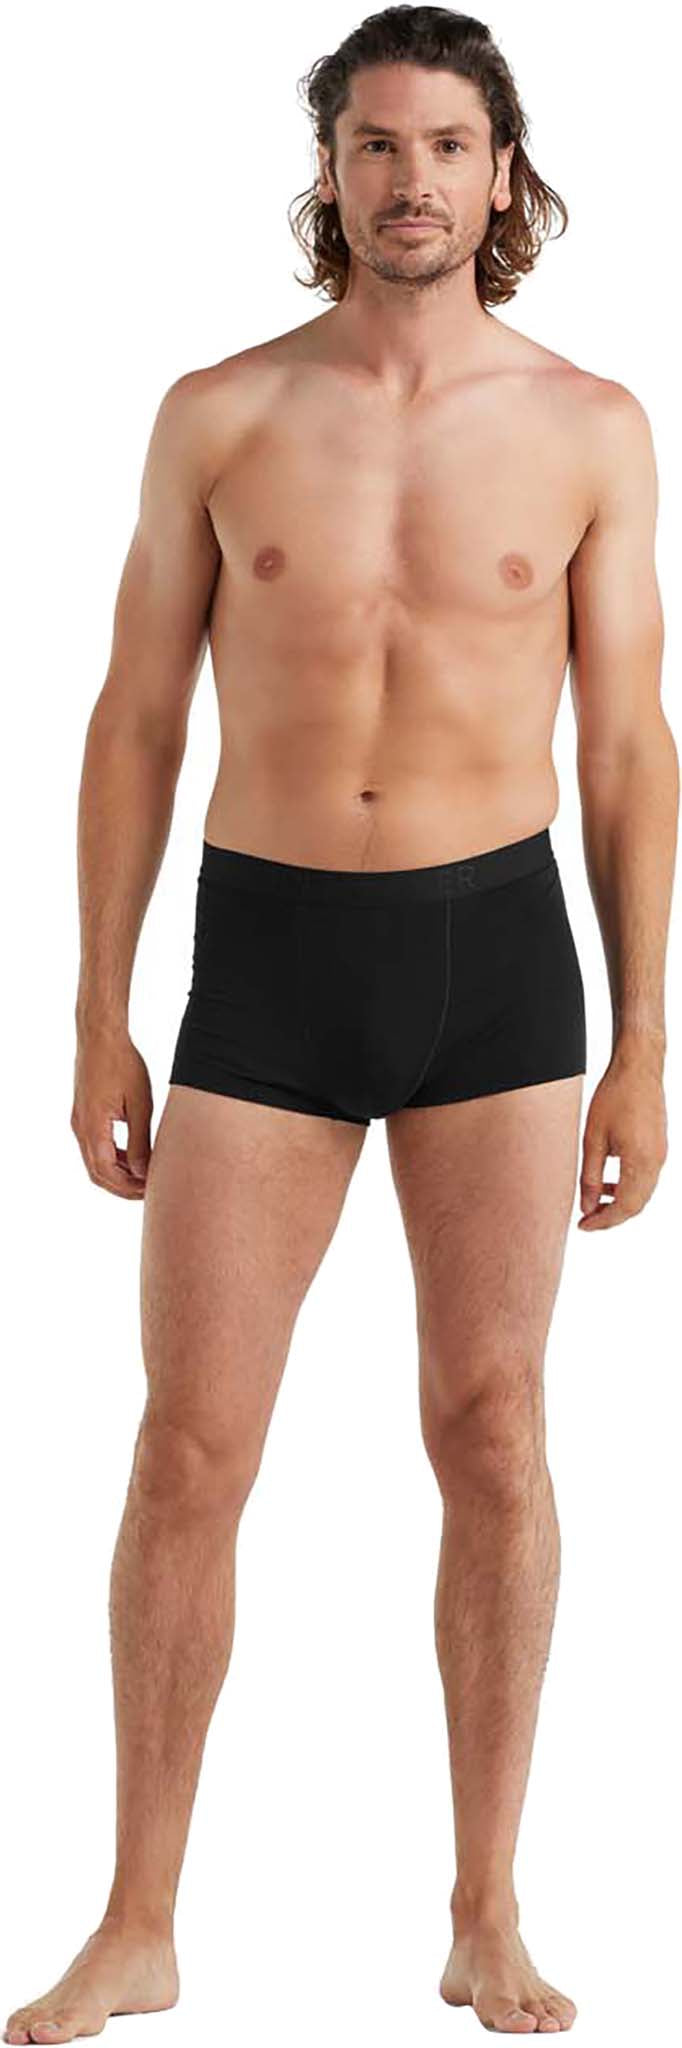 Icebreaker Merino Men's Anatomica Cool-Lite™ Underwear - Trunks, Monsoon  Heather, Medium